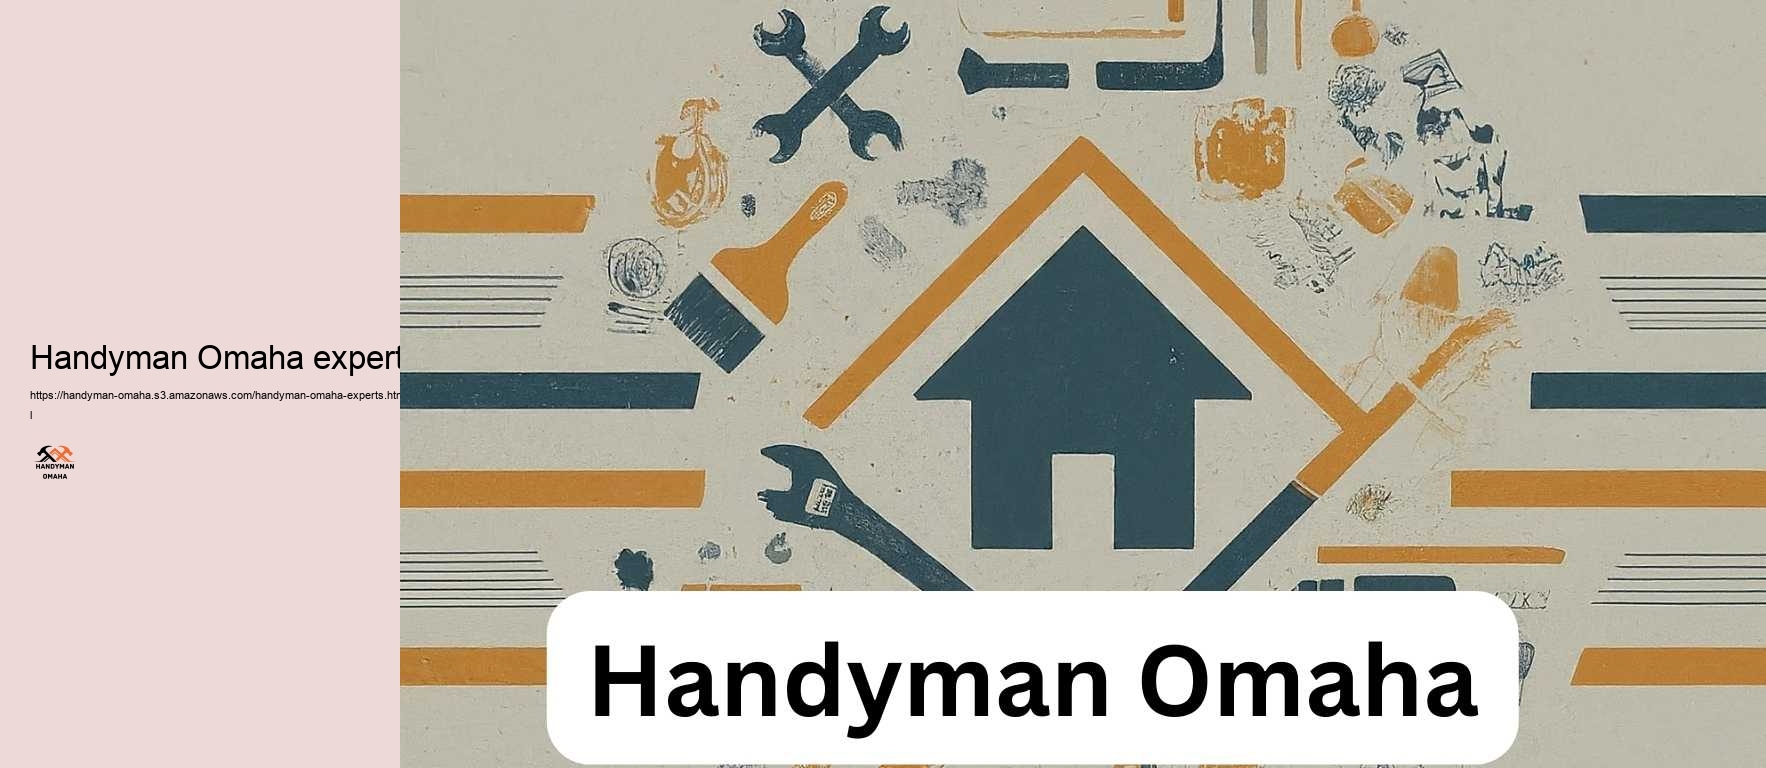 Handyman Omaha experts